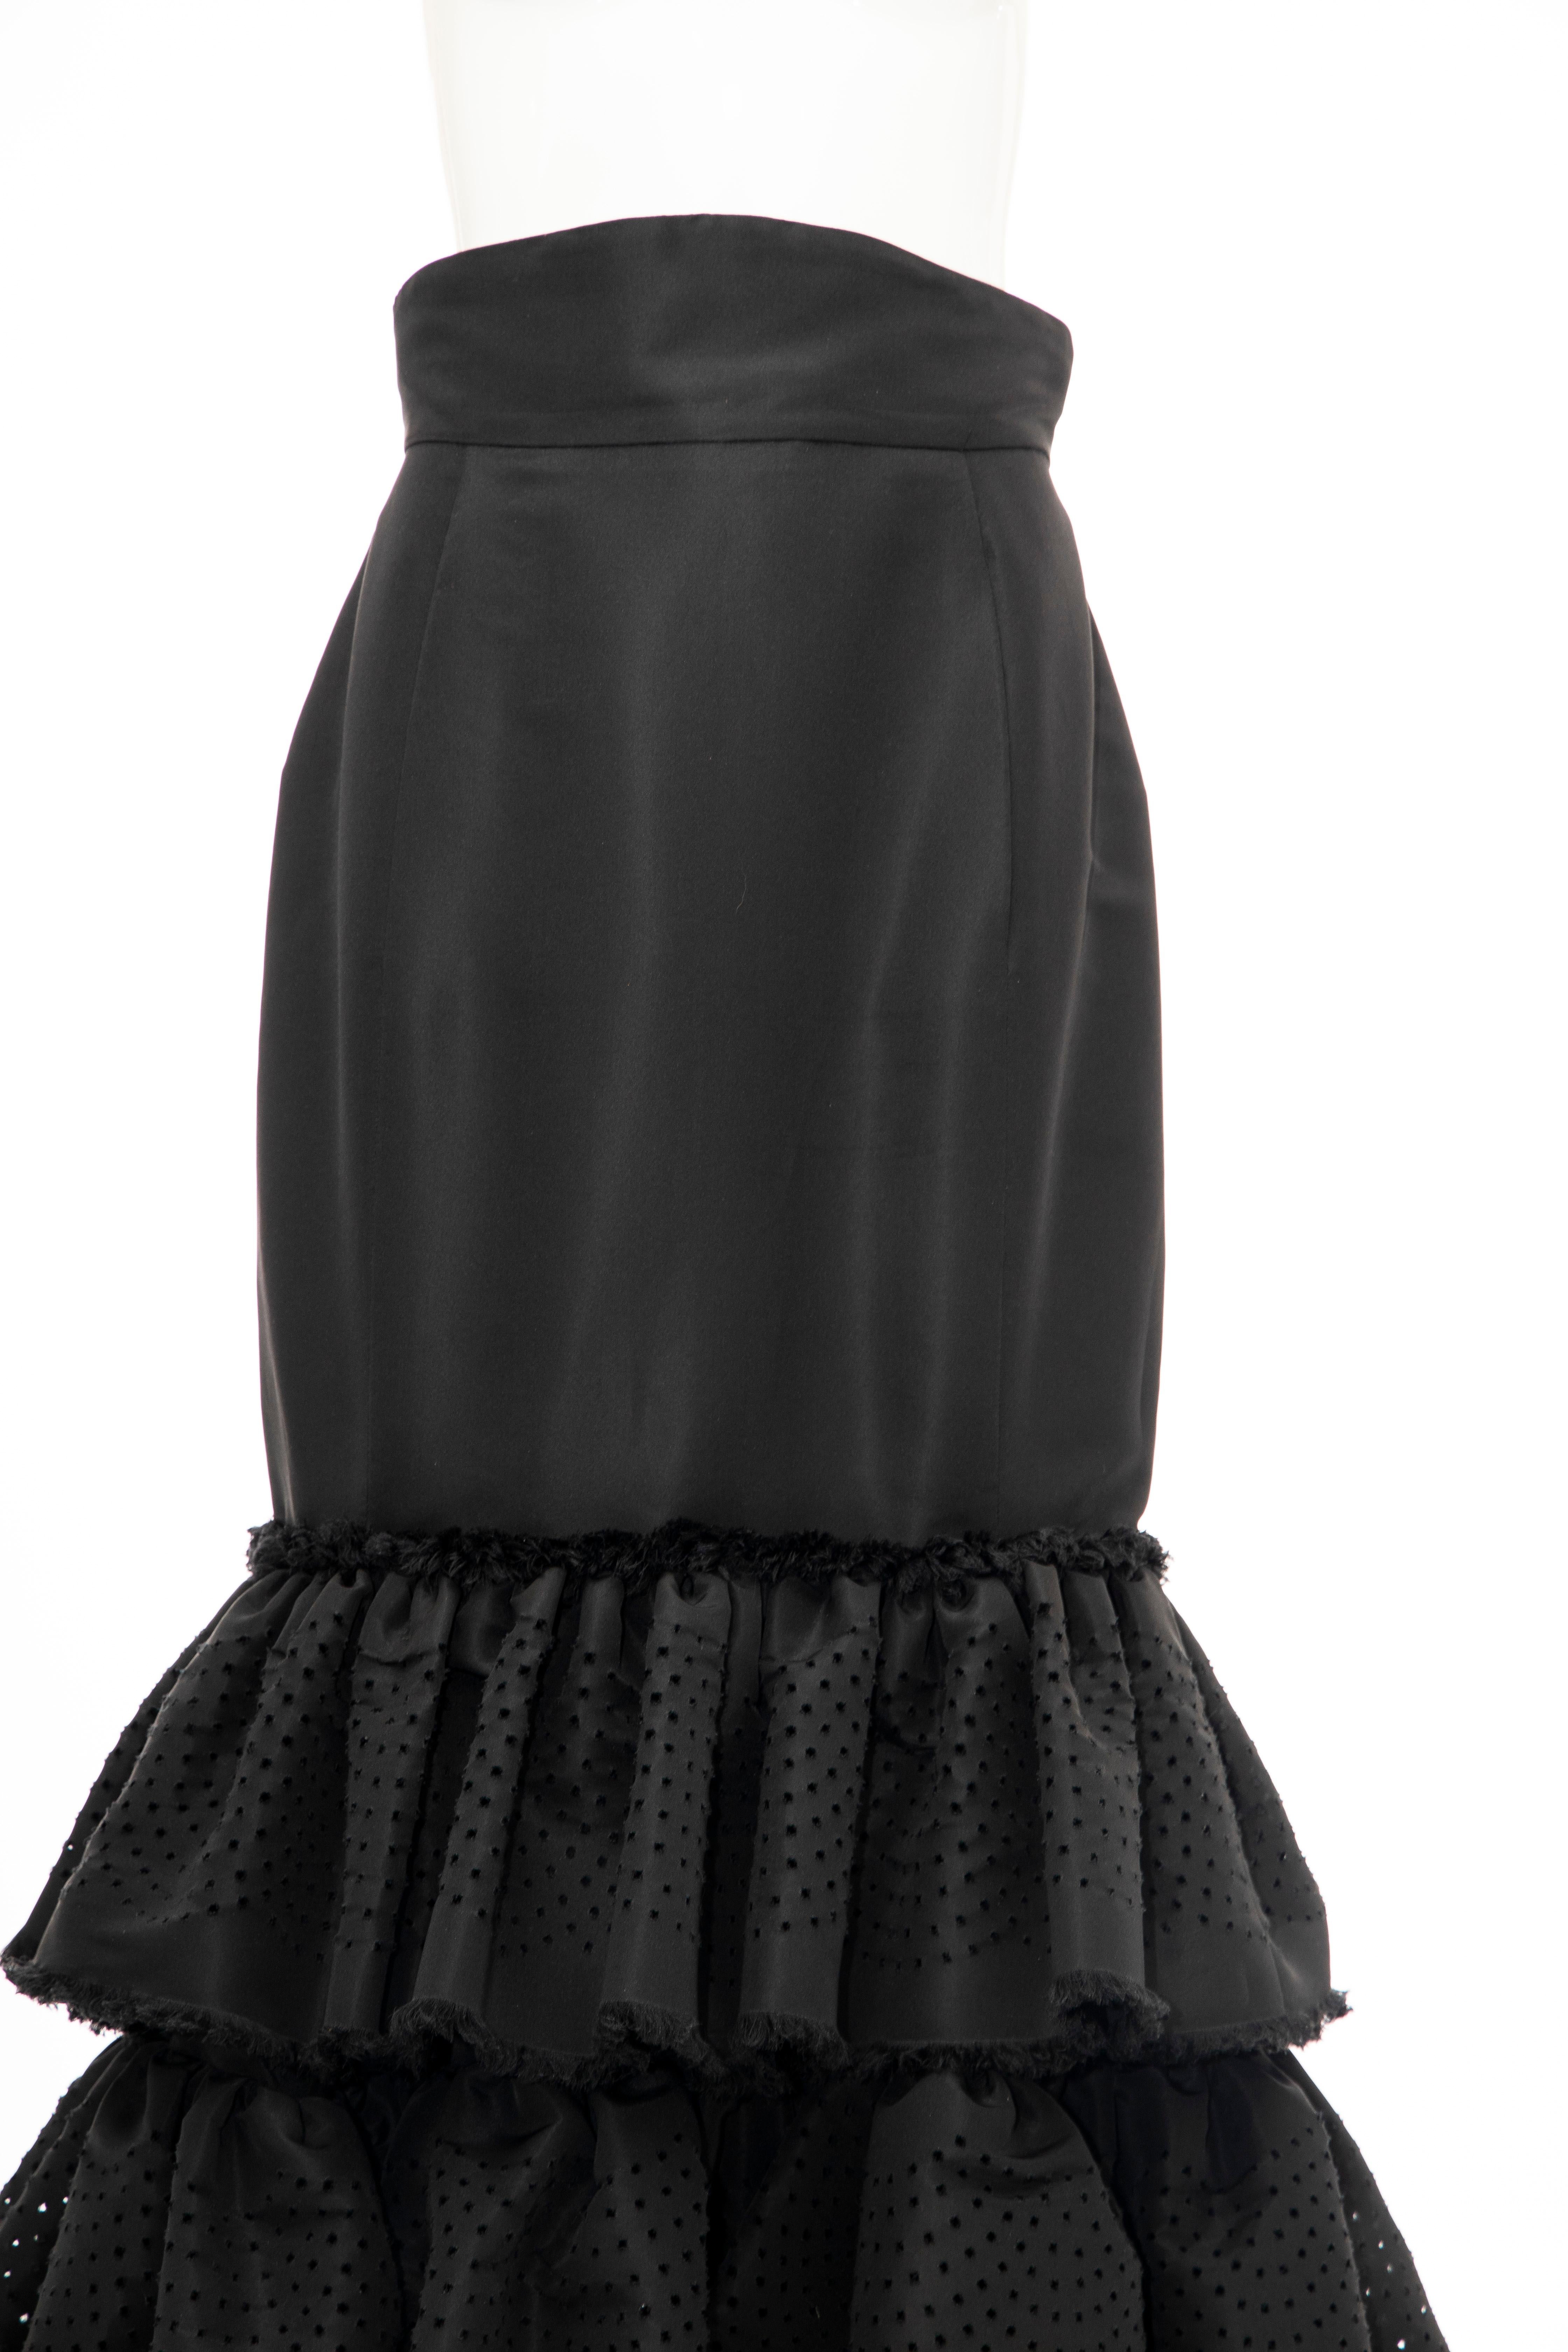 Oscar de la Renta Black Punched Silk Faille Evening Skirt, Fall 2001 For Sale 2